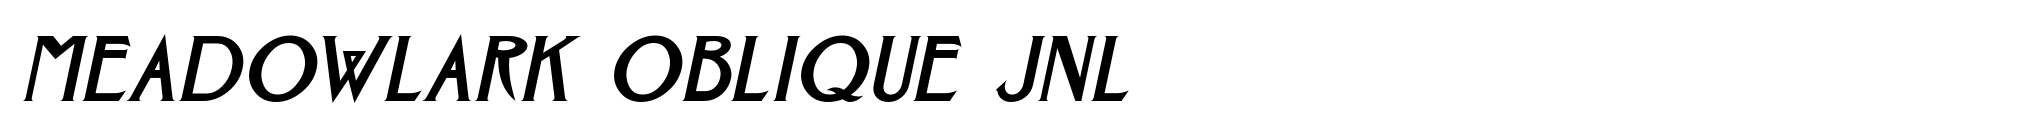 Meadowlark Oblique JNL image